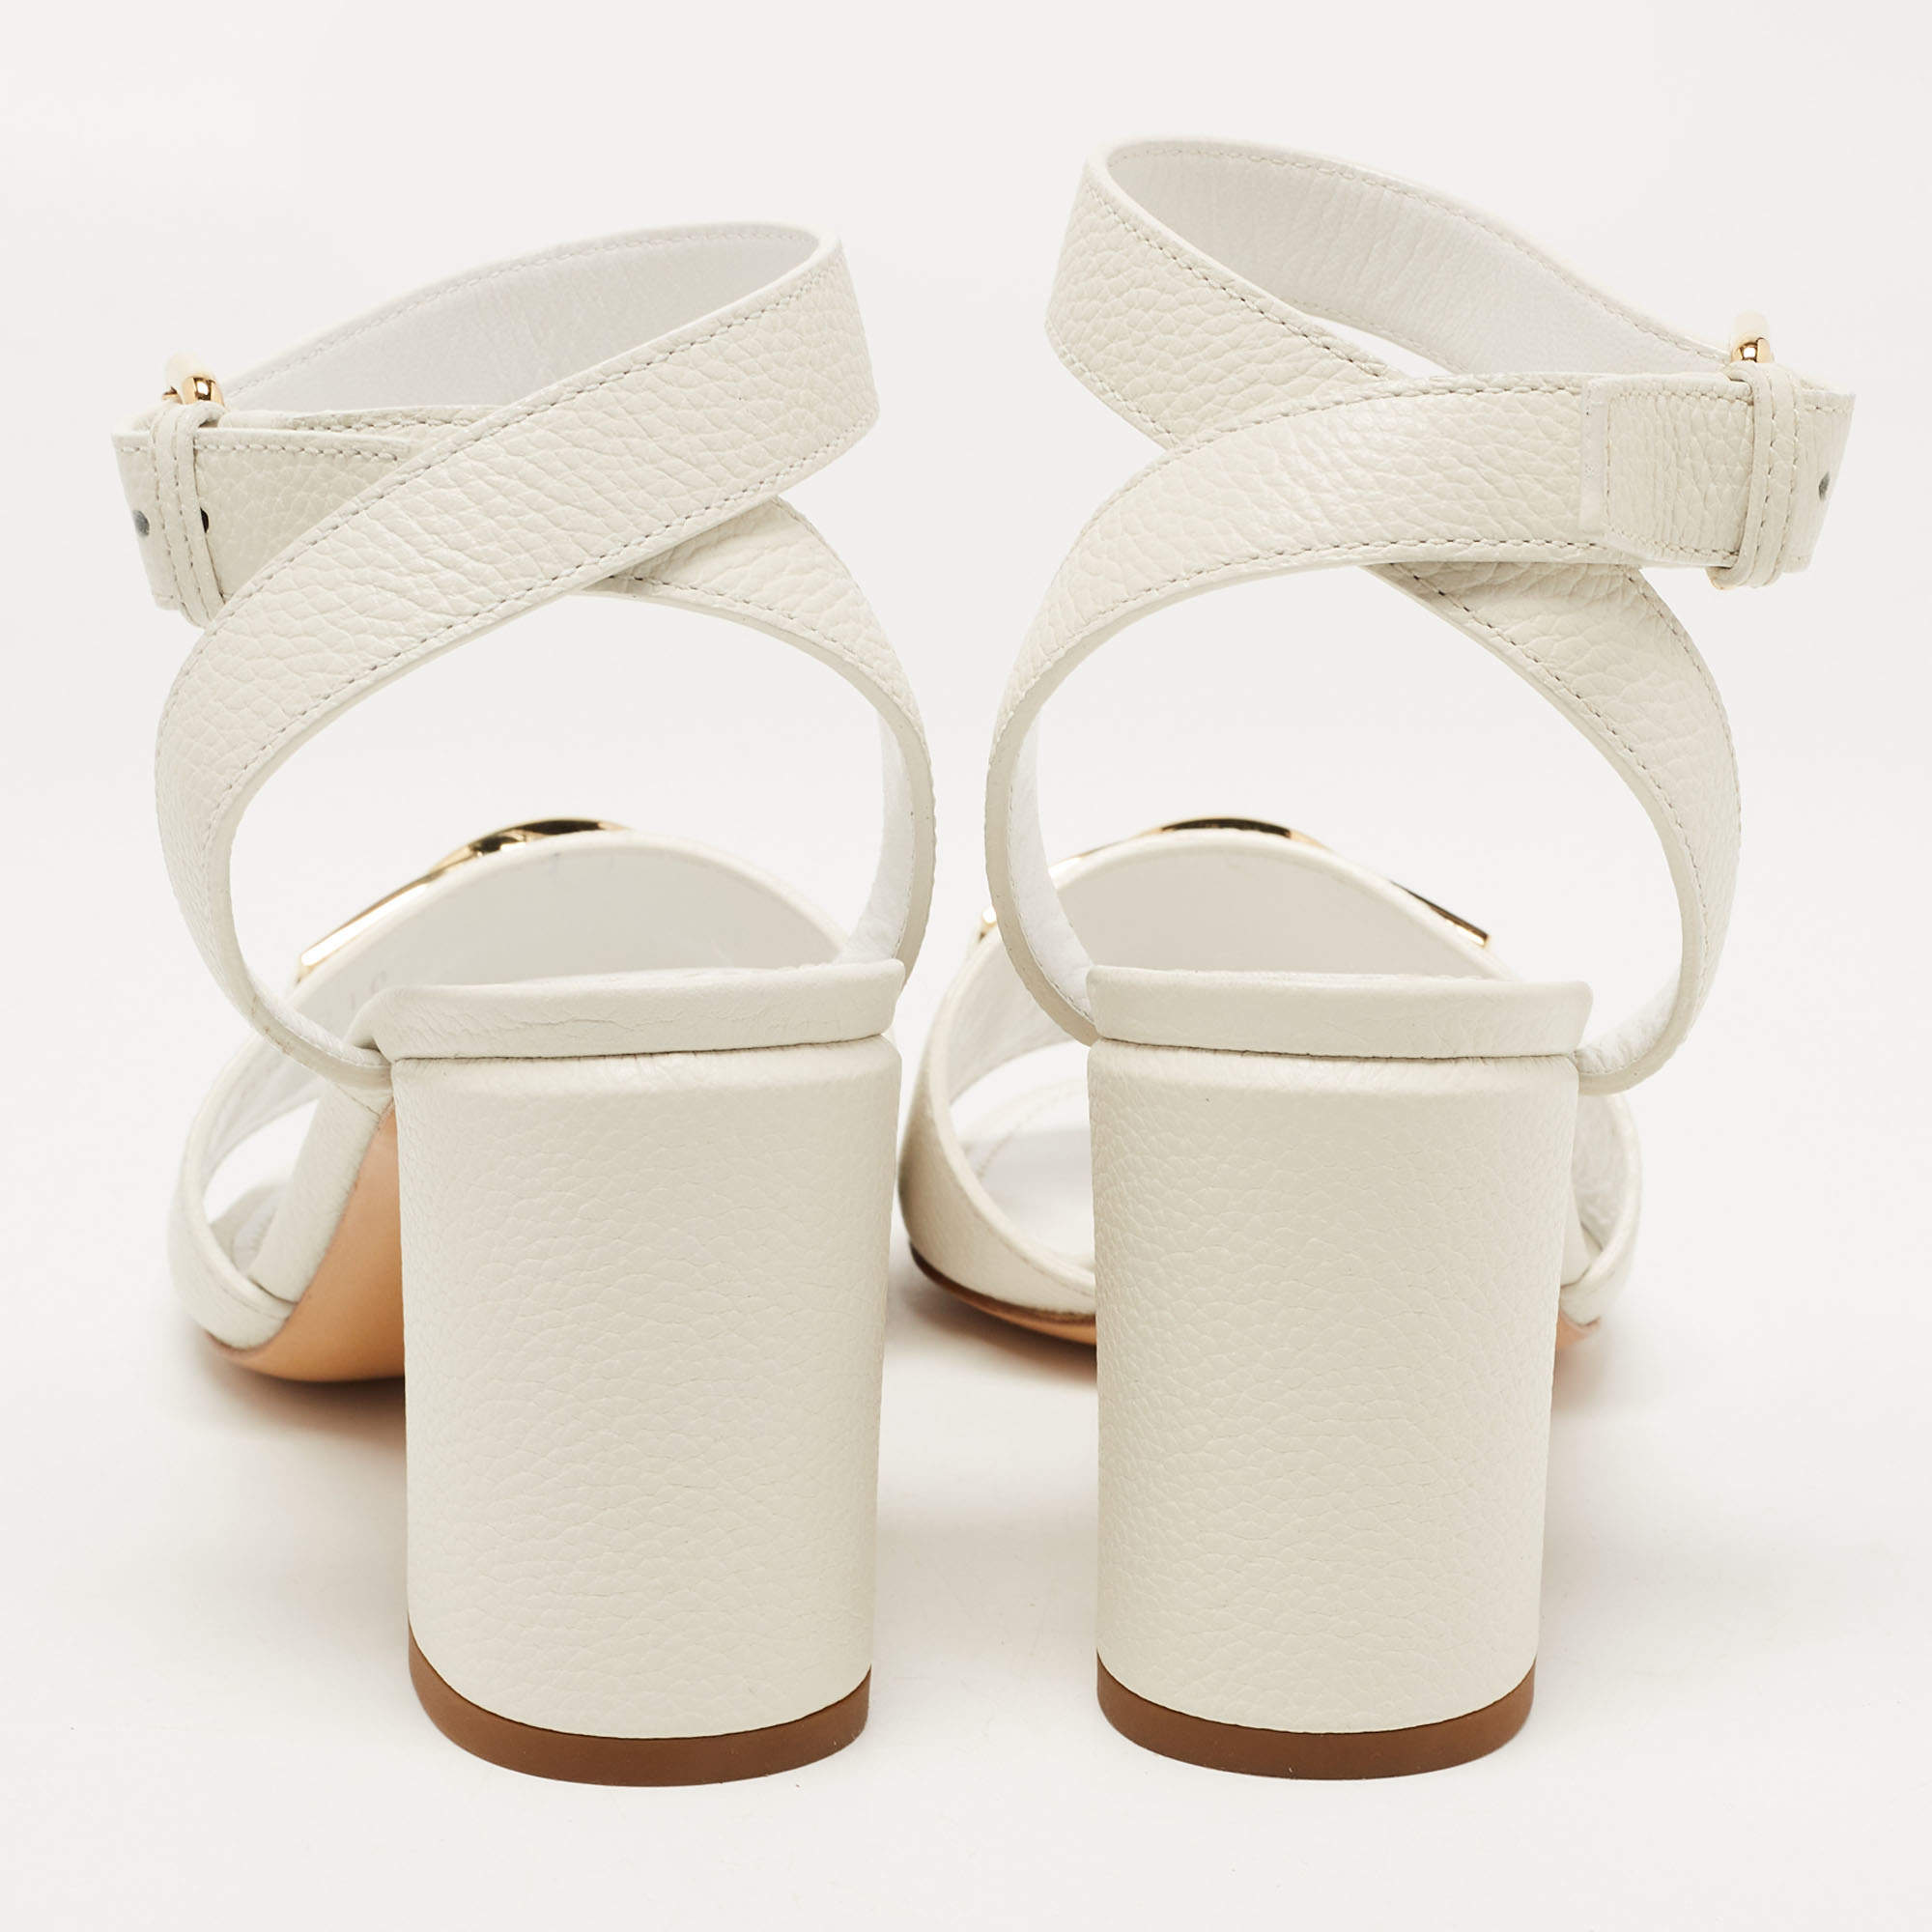 Louis Vuitton White Leather Ankle Strap Sandals Size 36 Louis